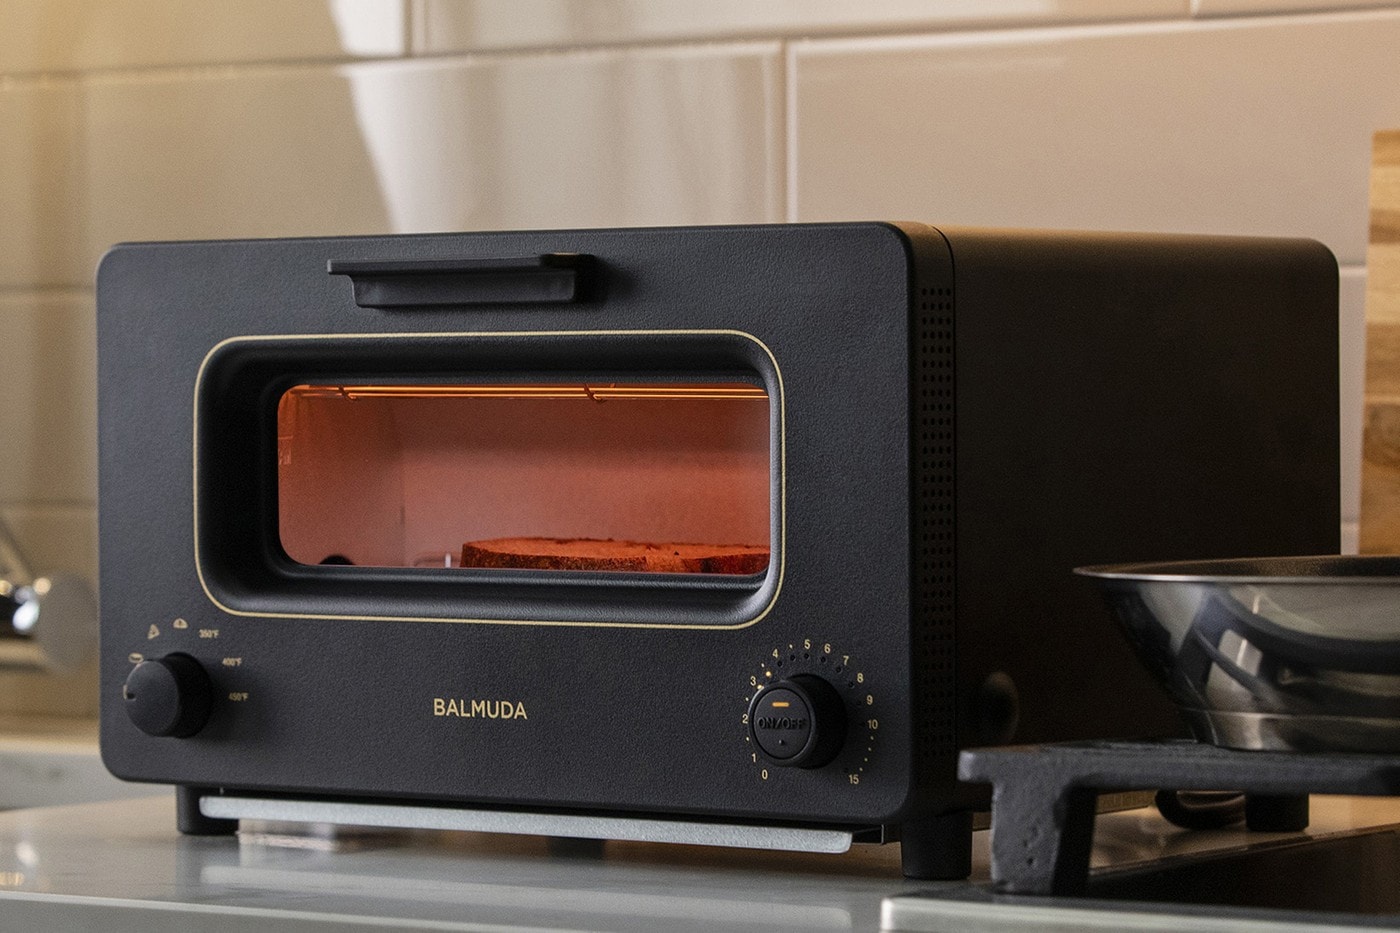 balmuda toaster oven kettle minimalist cooking kitchen home appliances Japan brand